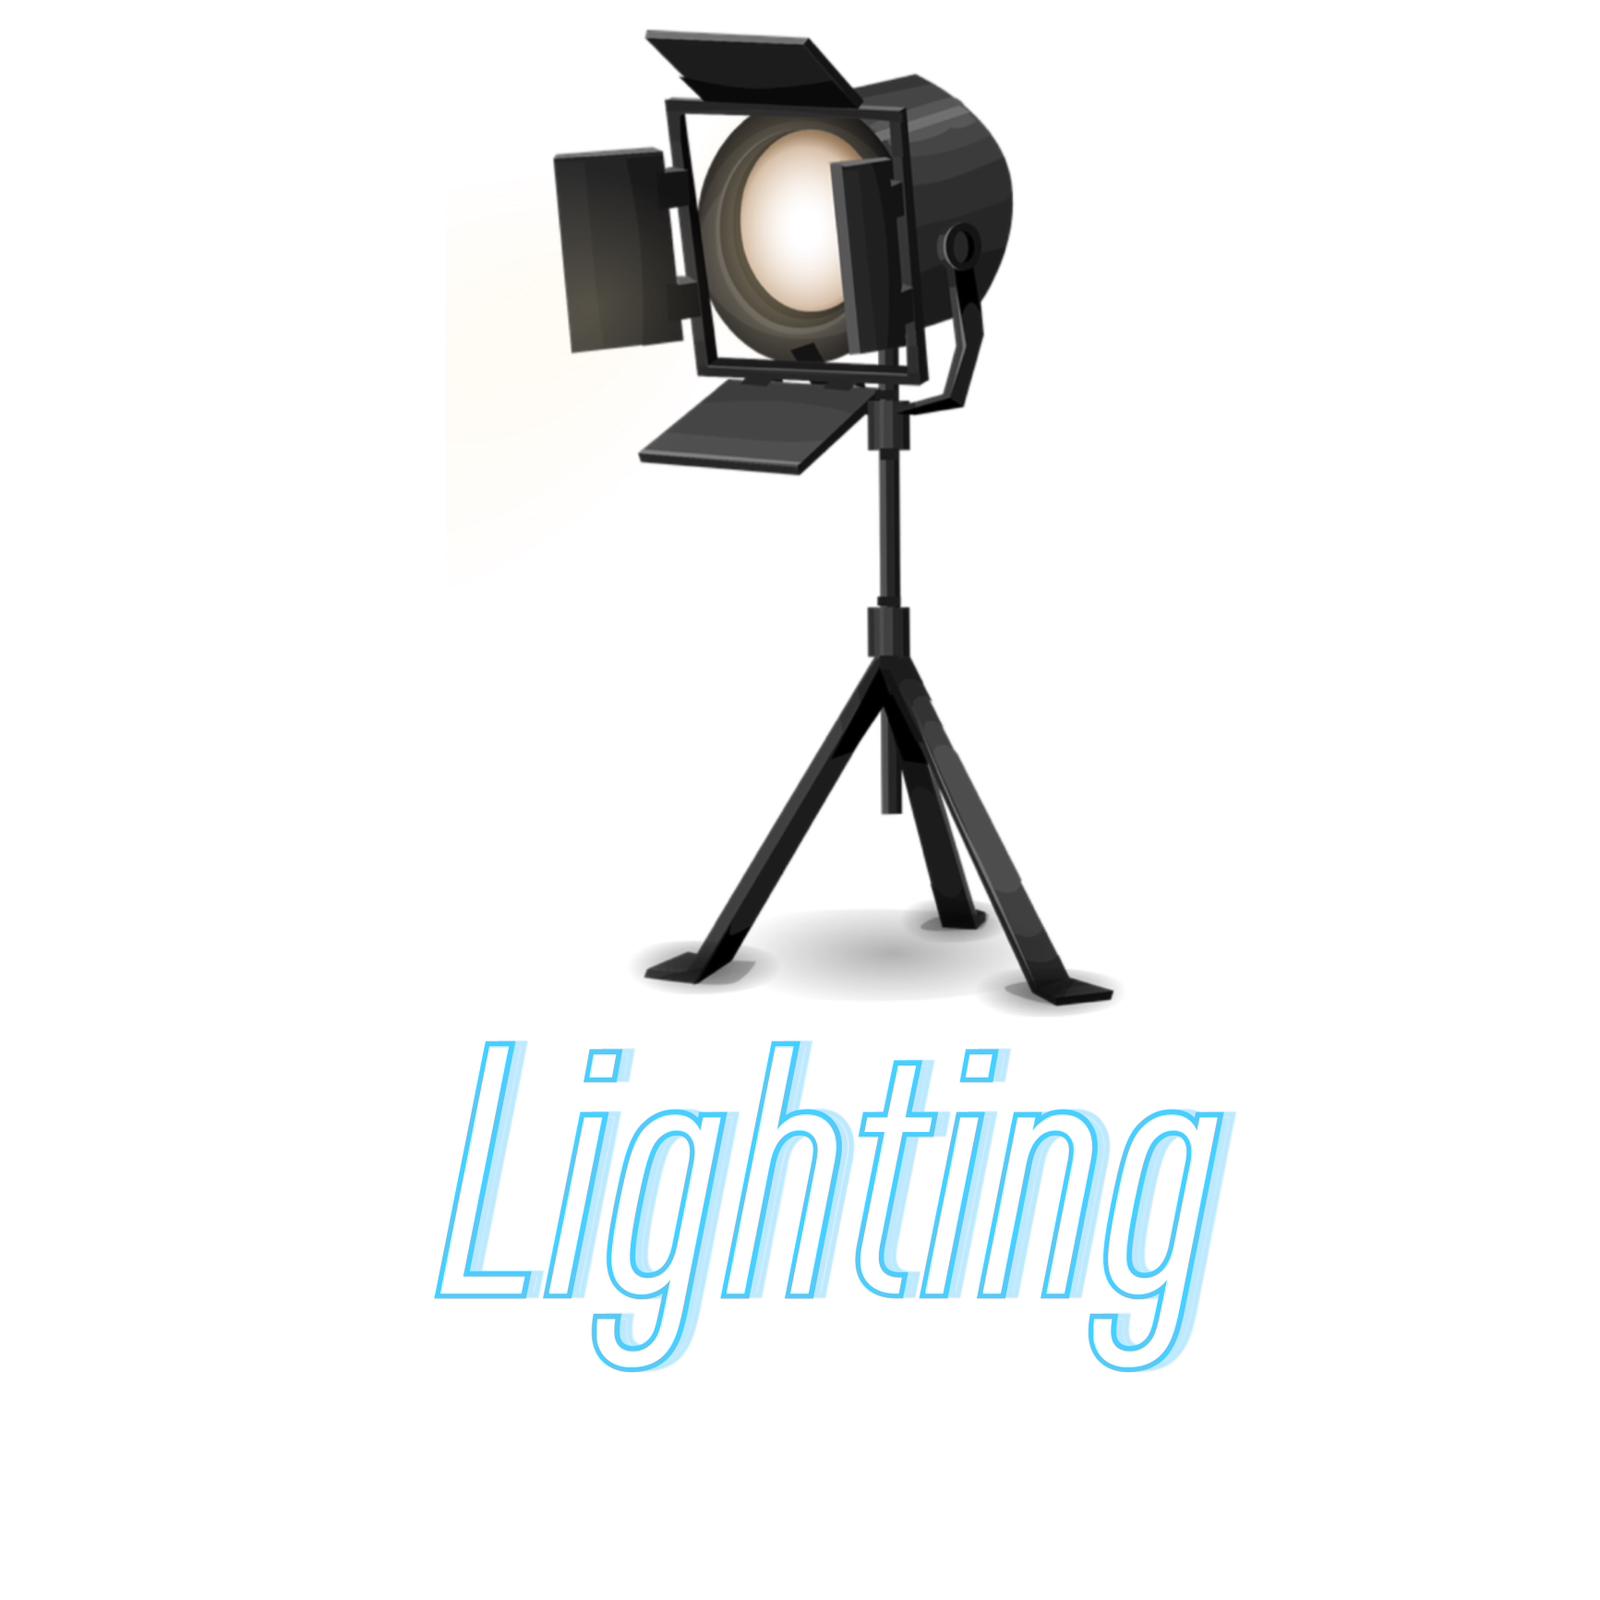 Lighting-Enhance Your Video Quality